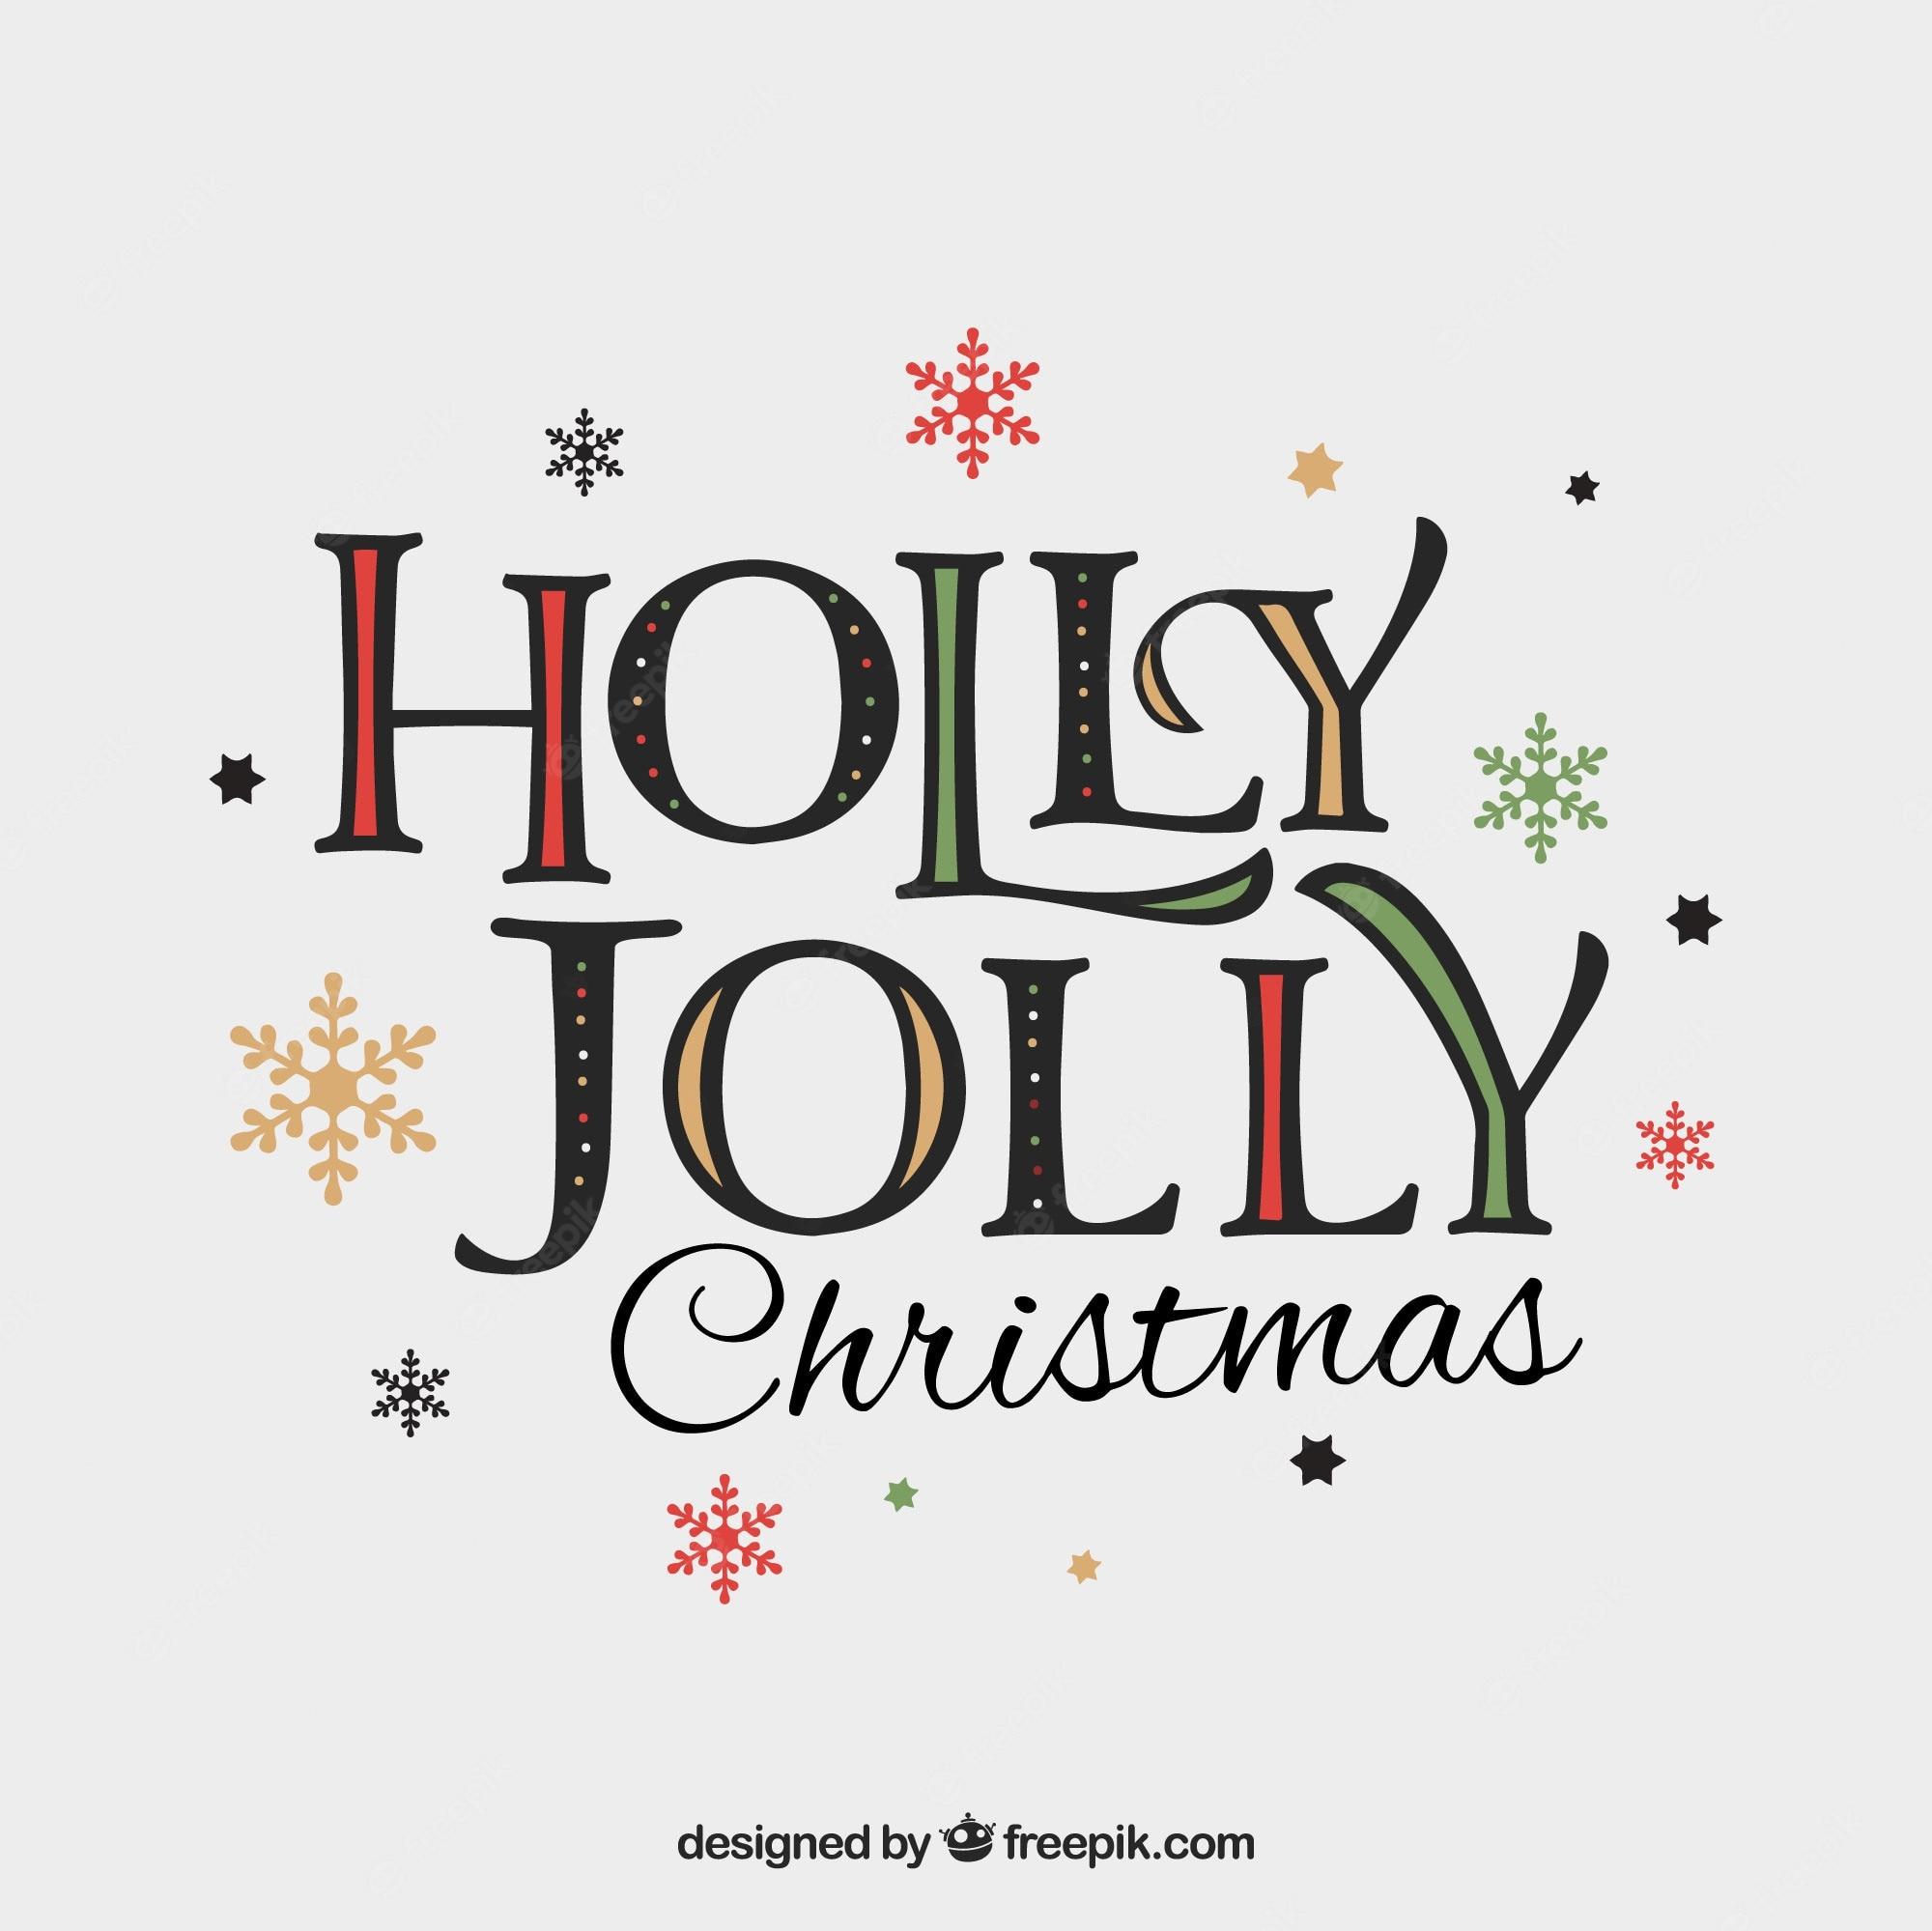 Holly Jolly Christmas Image Vectors Stock Photos Psd